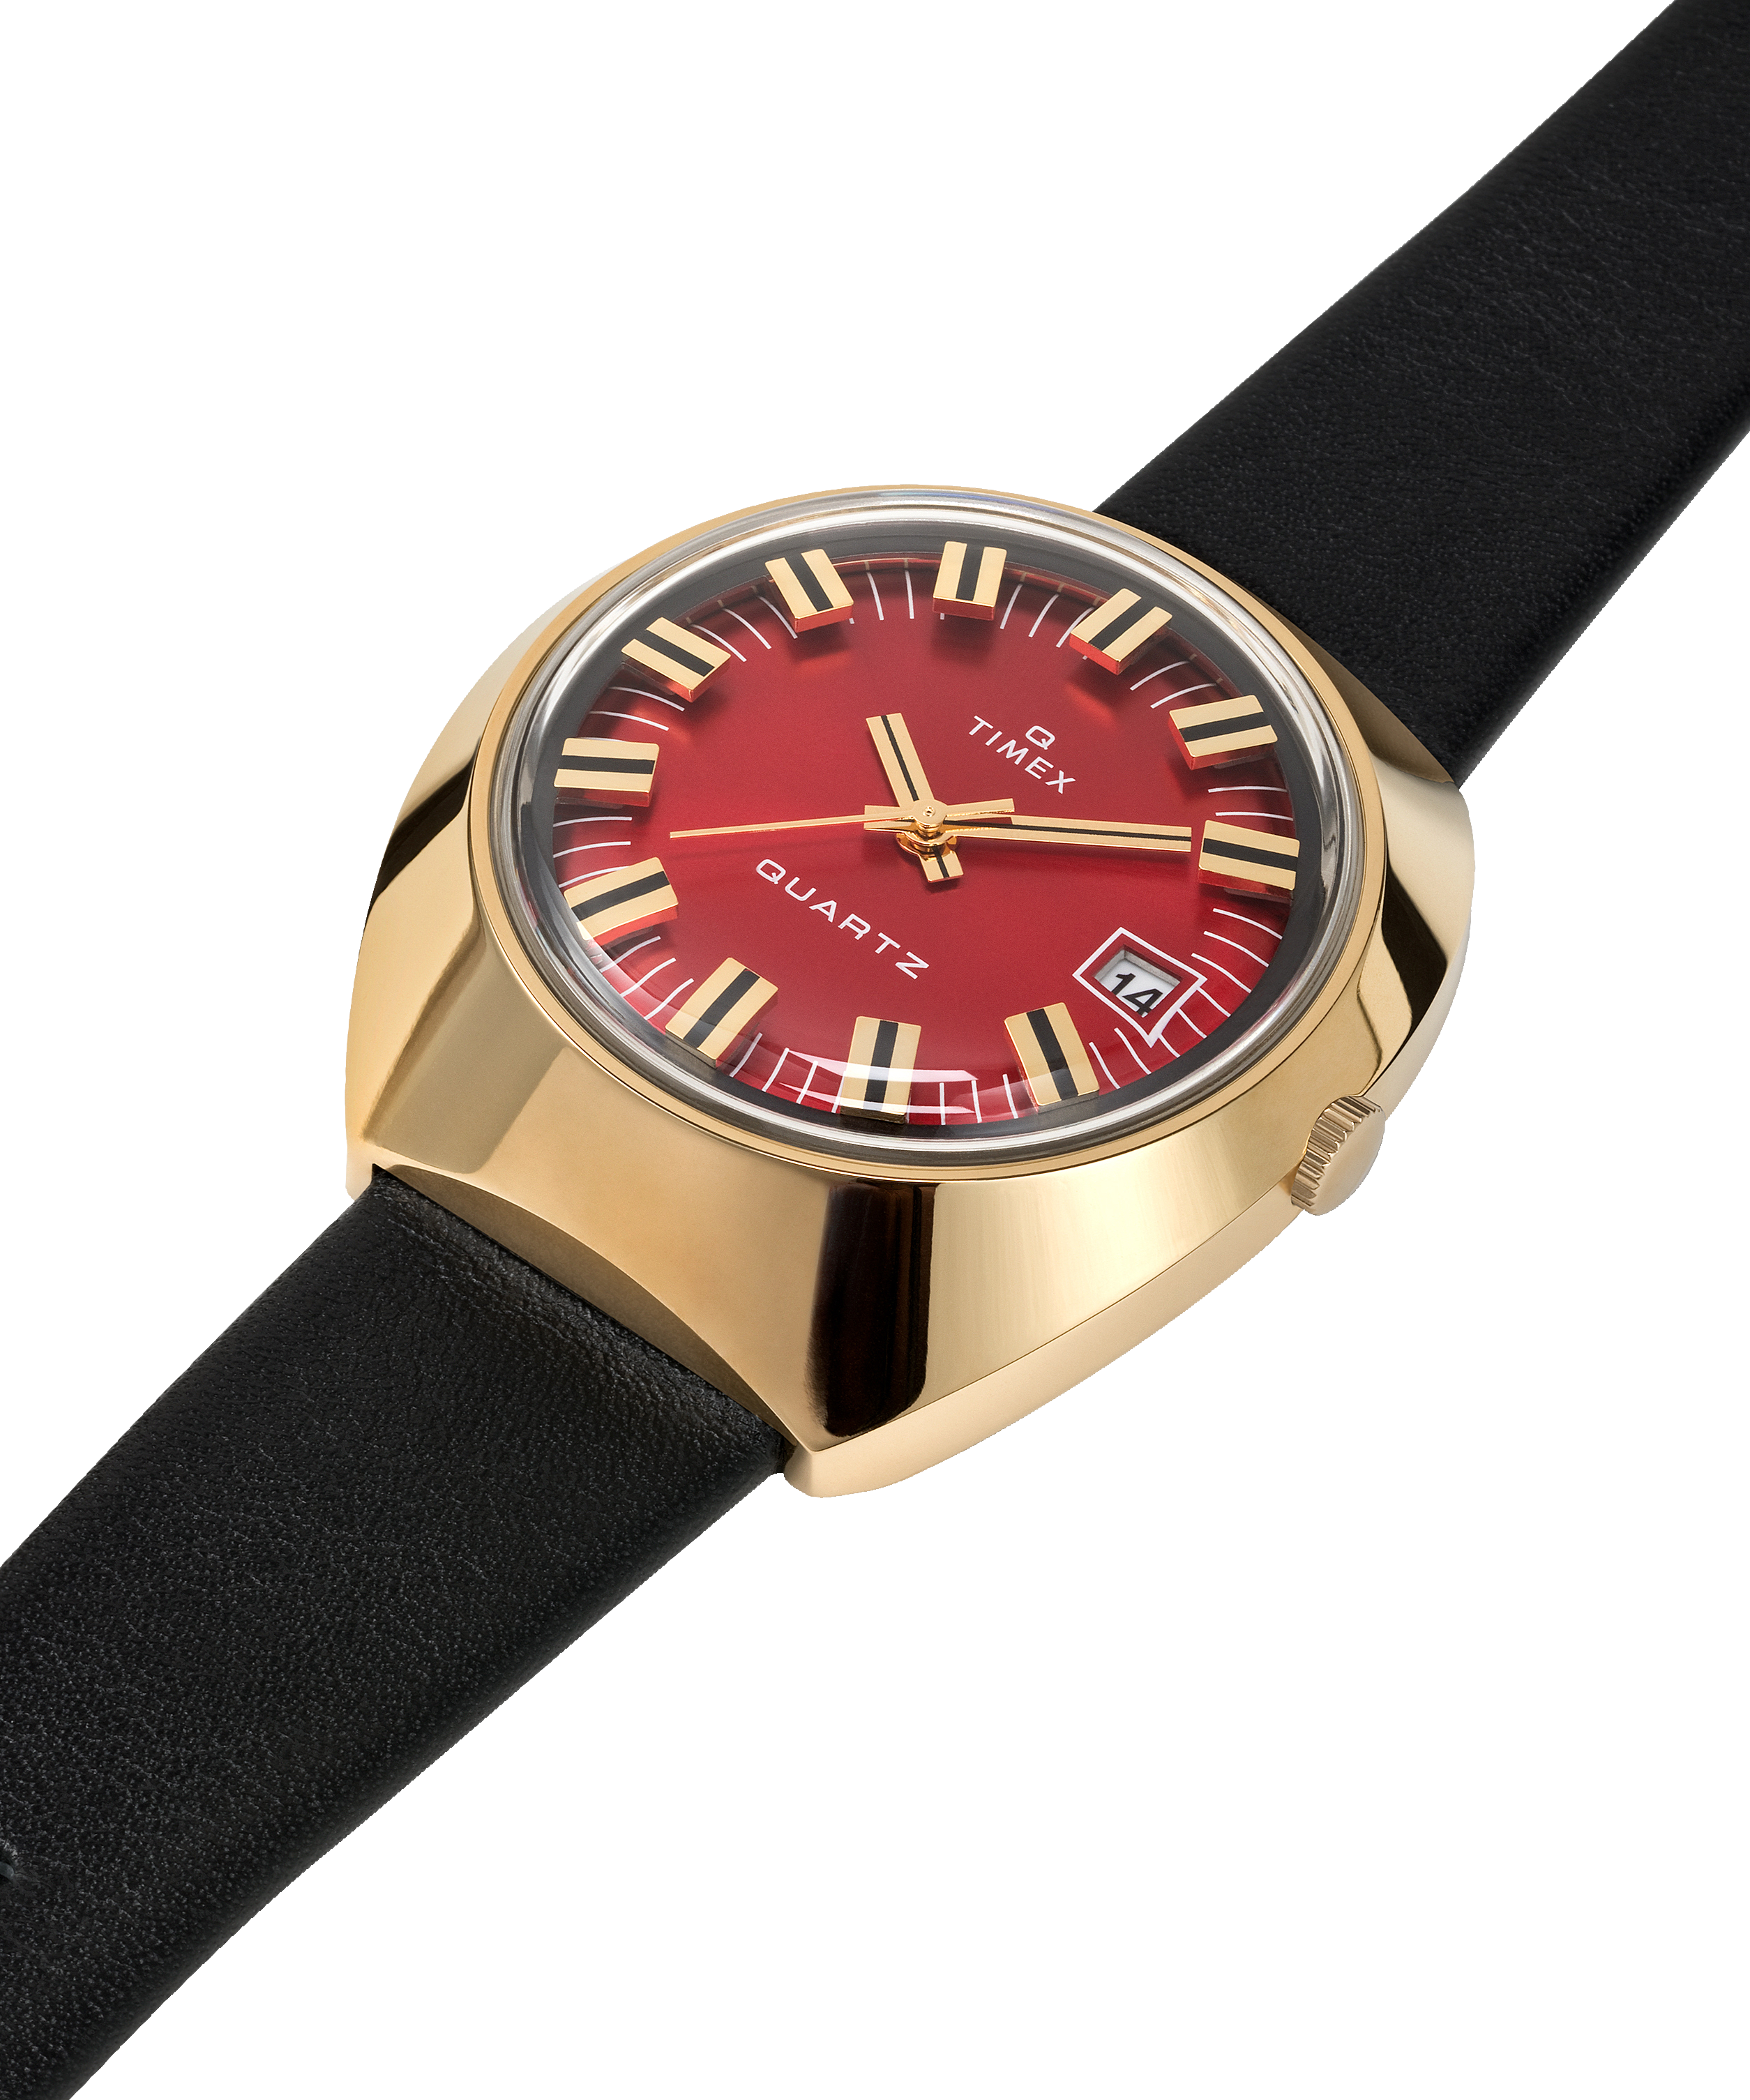 Q Timex 1972 Reissue 43mm Leather Strap Watch - Timex US